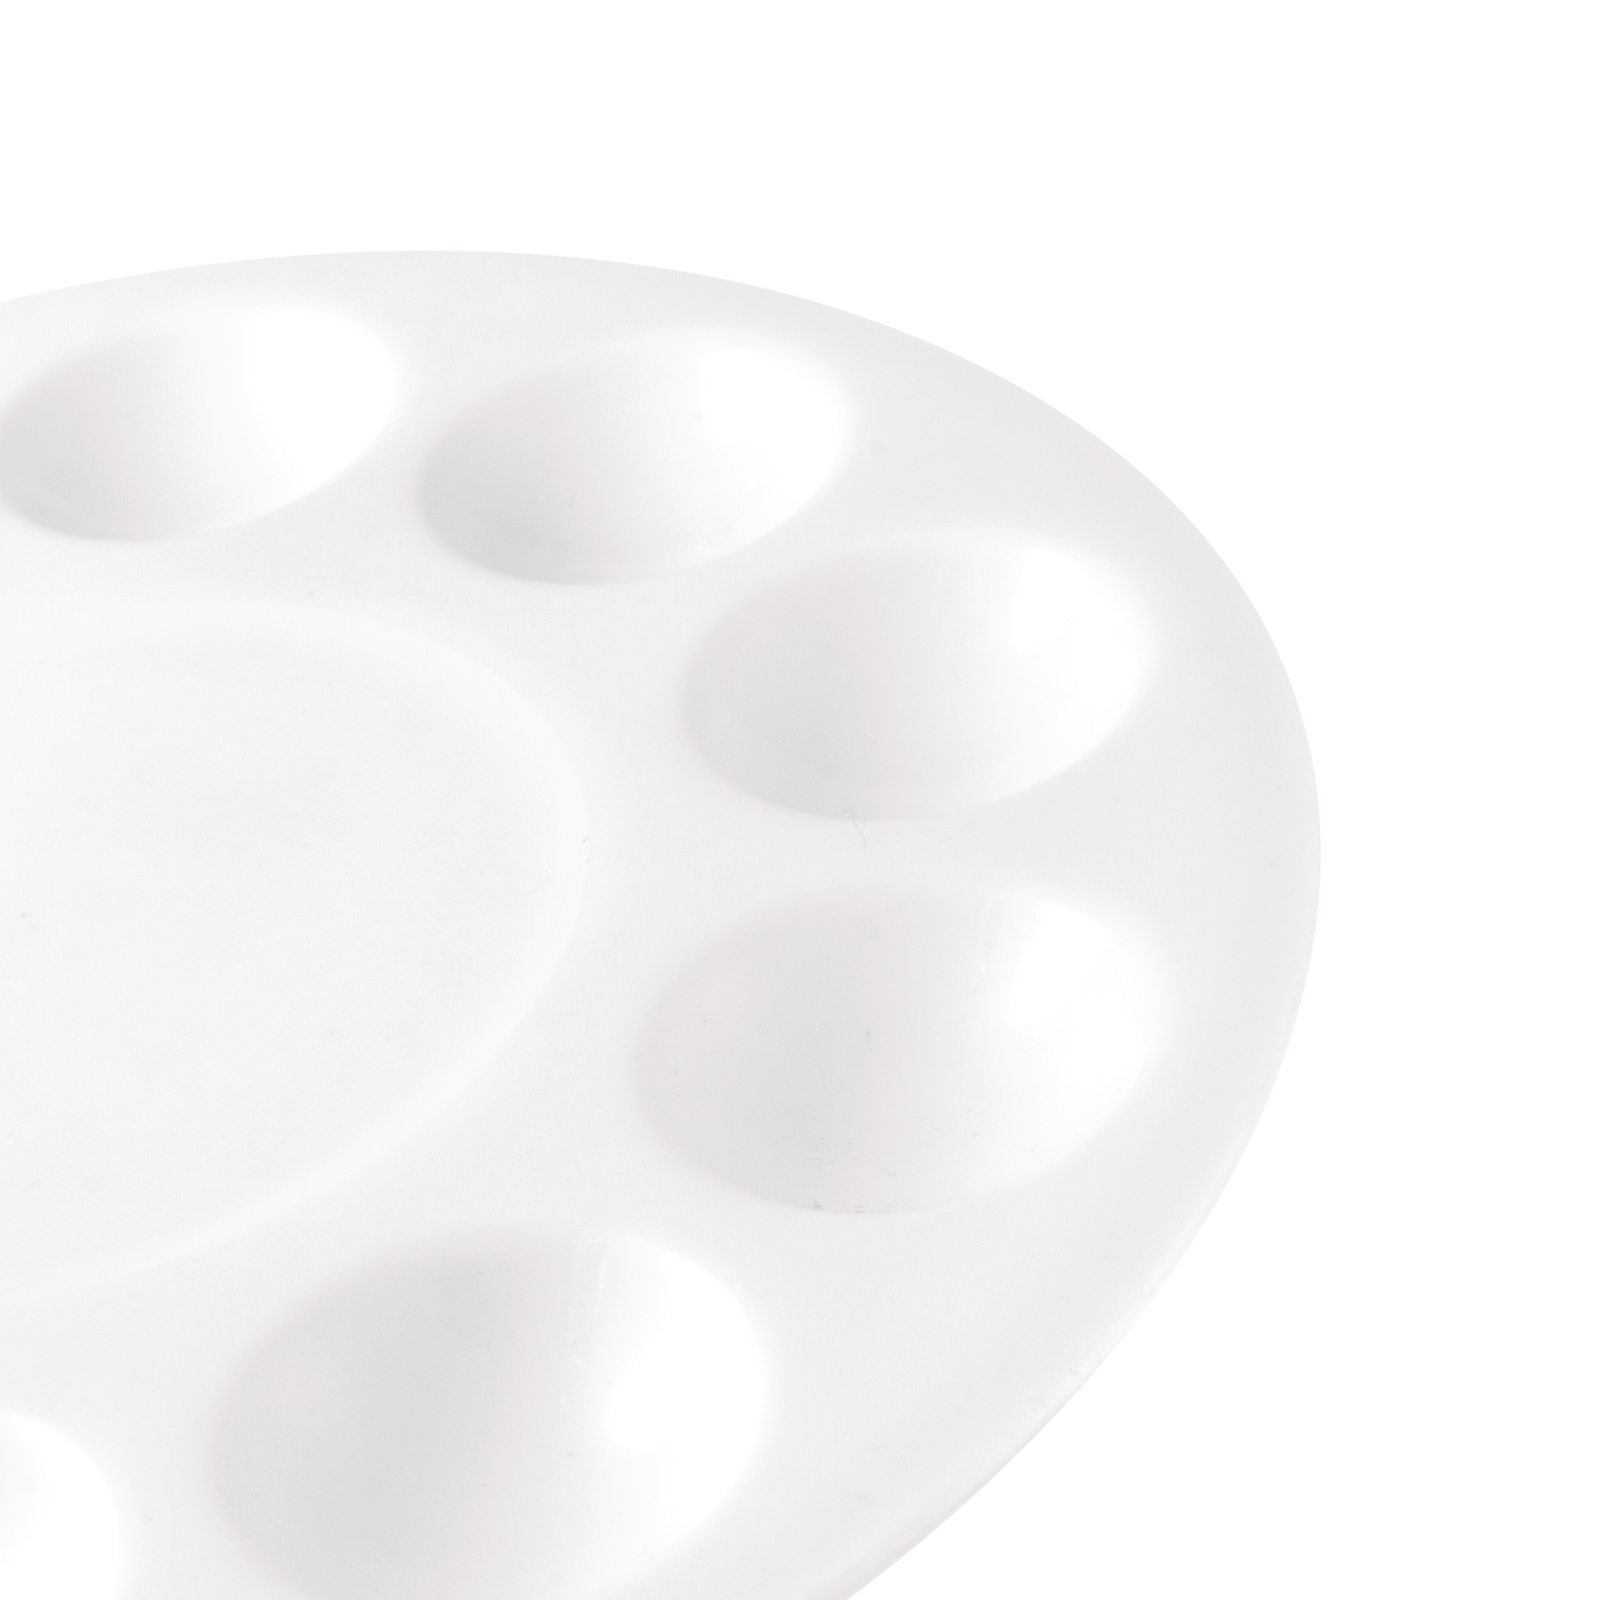 ATL - Godete de plástico circular rígido con 10 cavidades